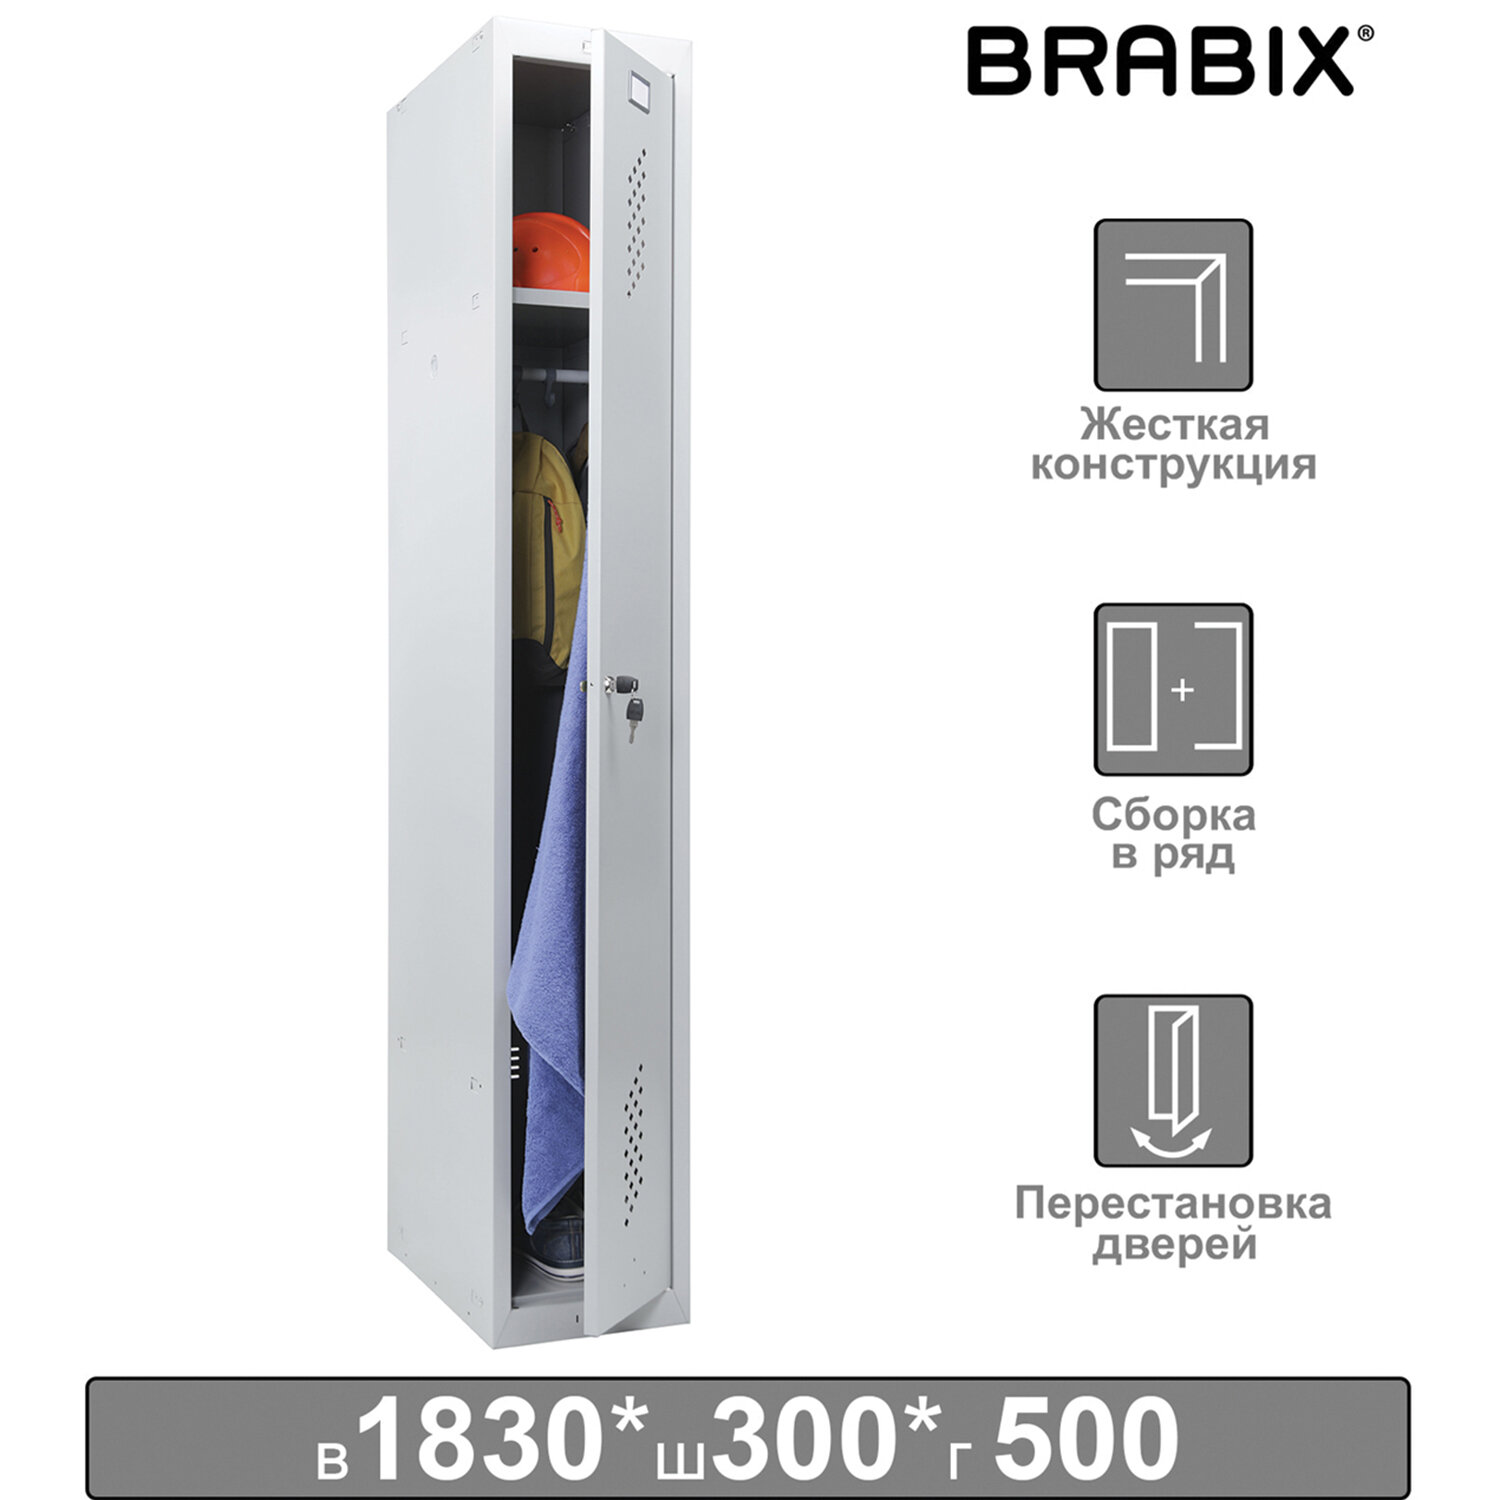 Brabix     BRABIX LK 11-30, , 1 , 1830300500 ,18 , 291127, S230BR401102